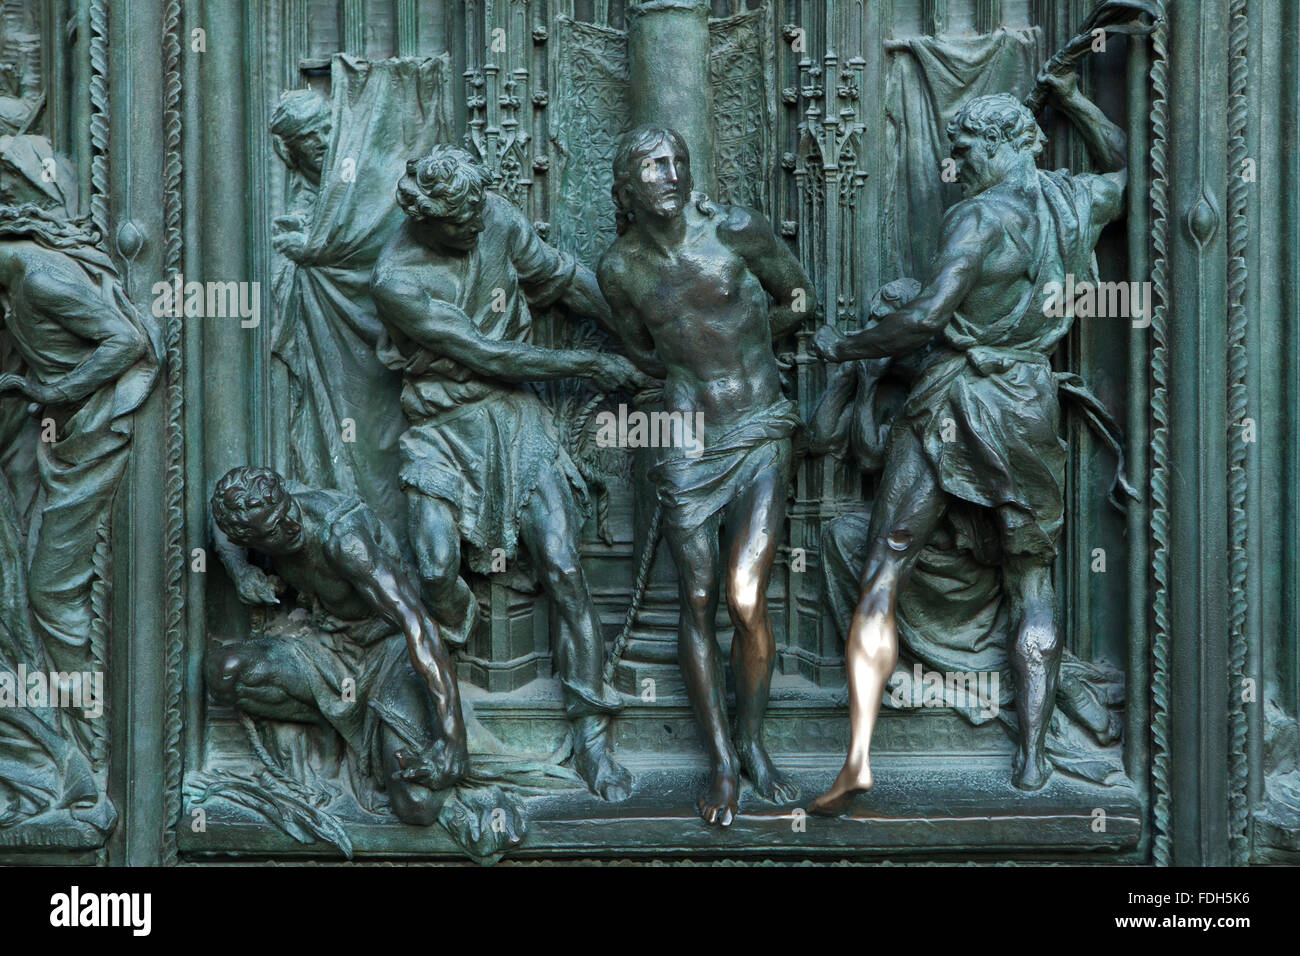 Flagellation of Christ. Detail of the main bronze door of the Milan Cathedral (Duomo di Milano) in Milan, Italy. The bronze door Stock Photo